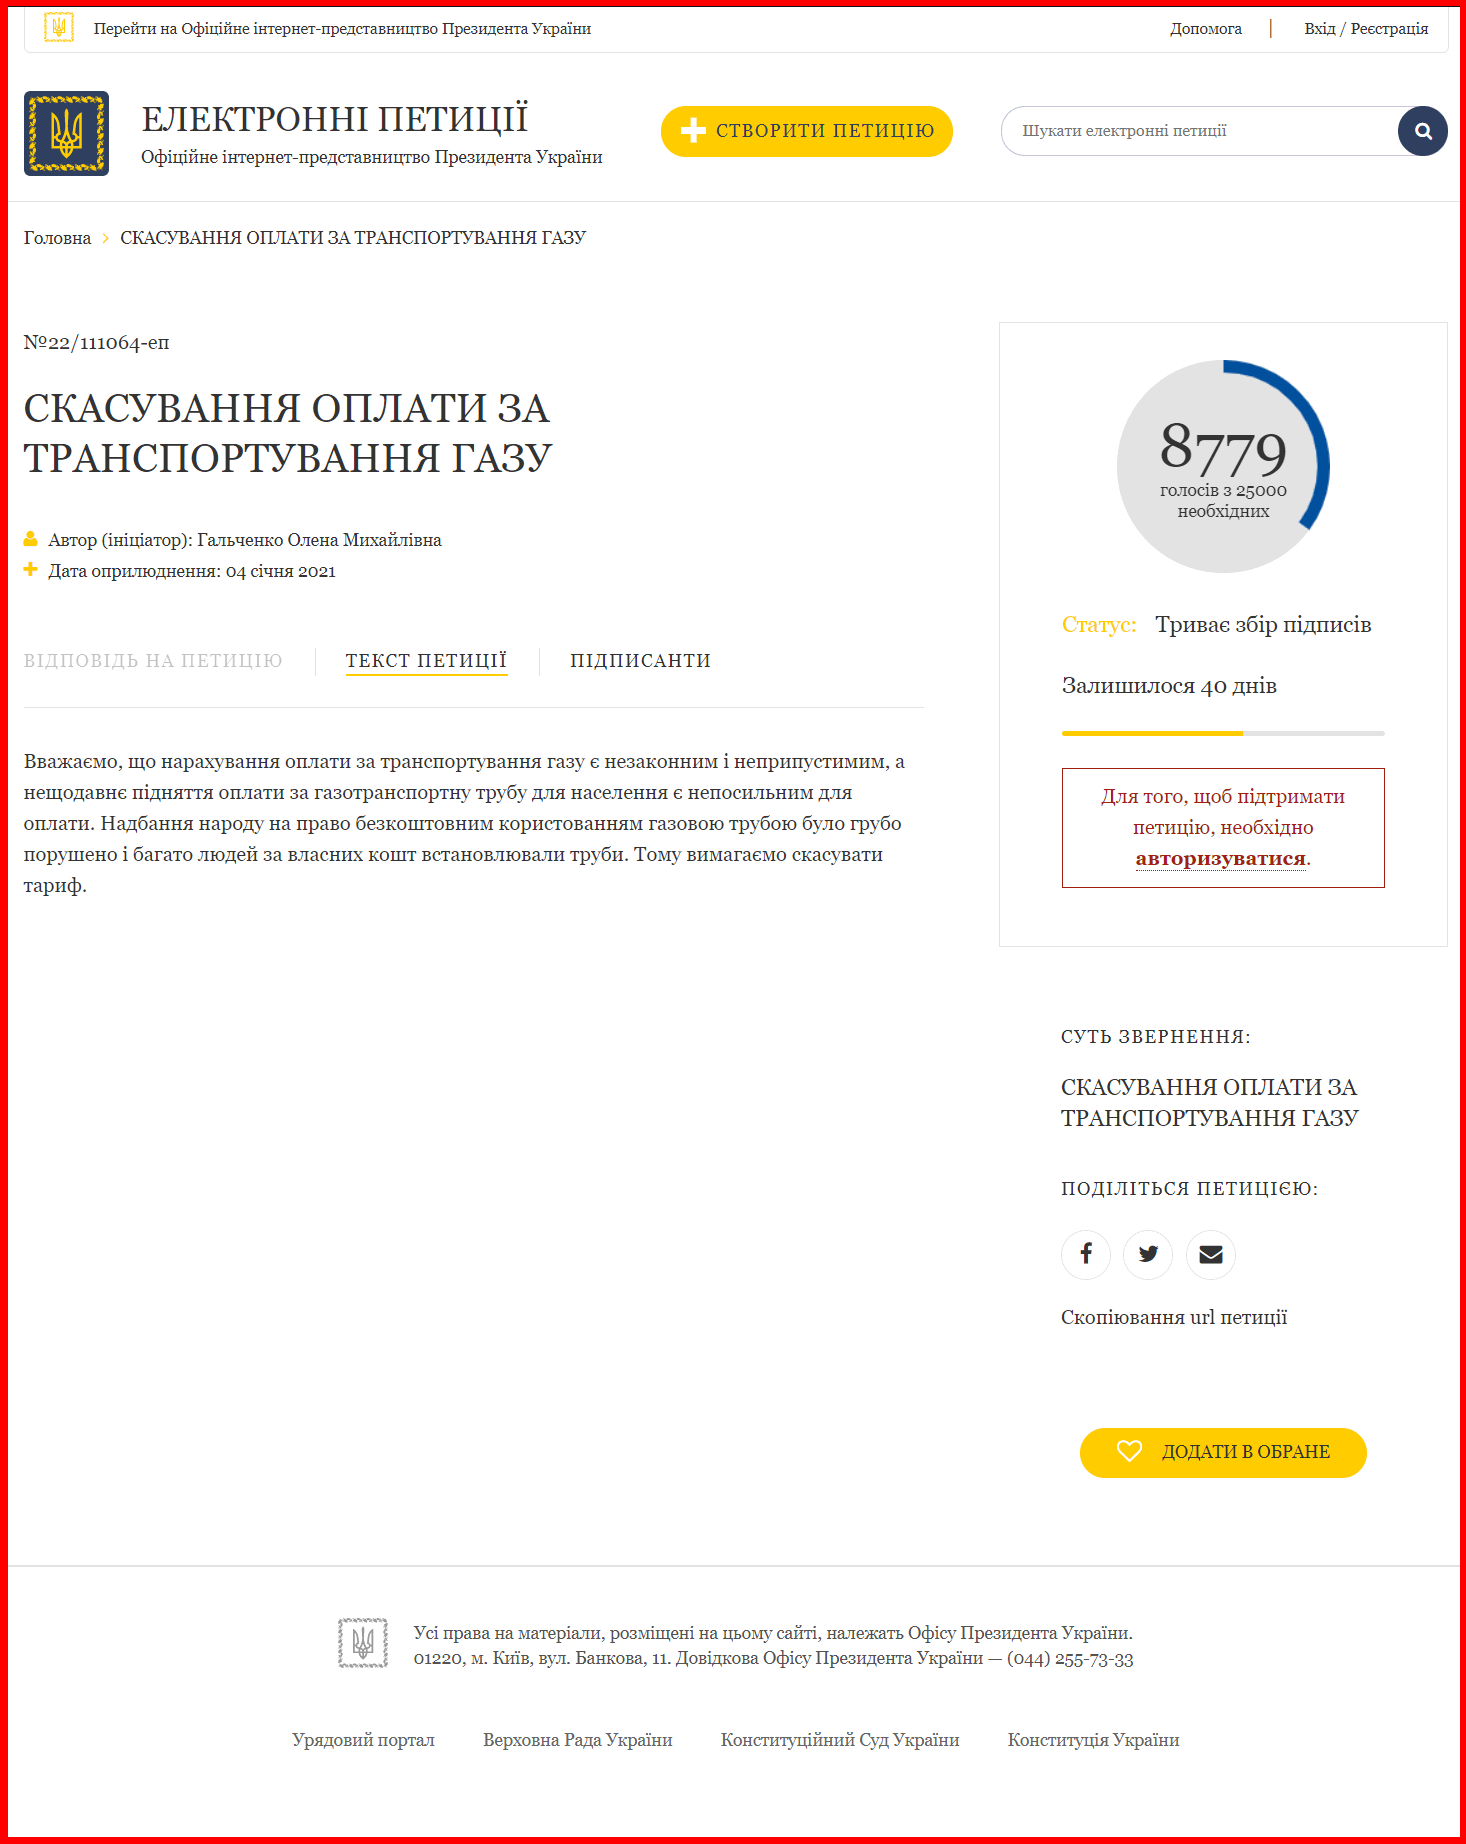 https://petition.president.gov.ua/petition/111064